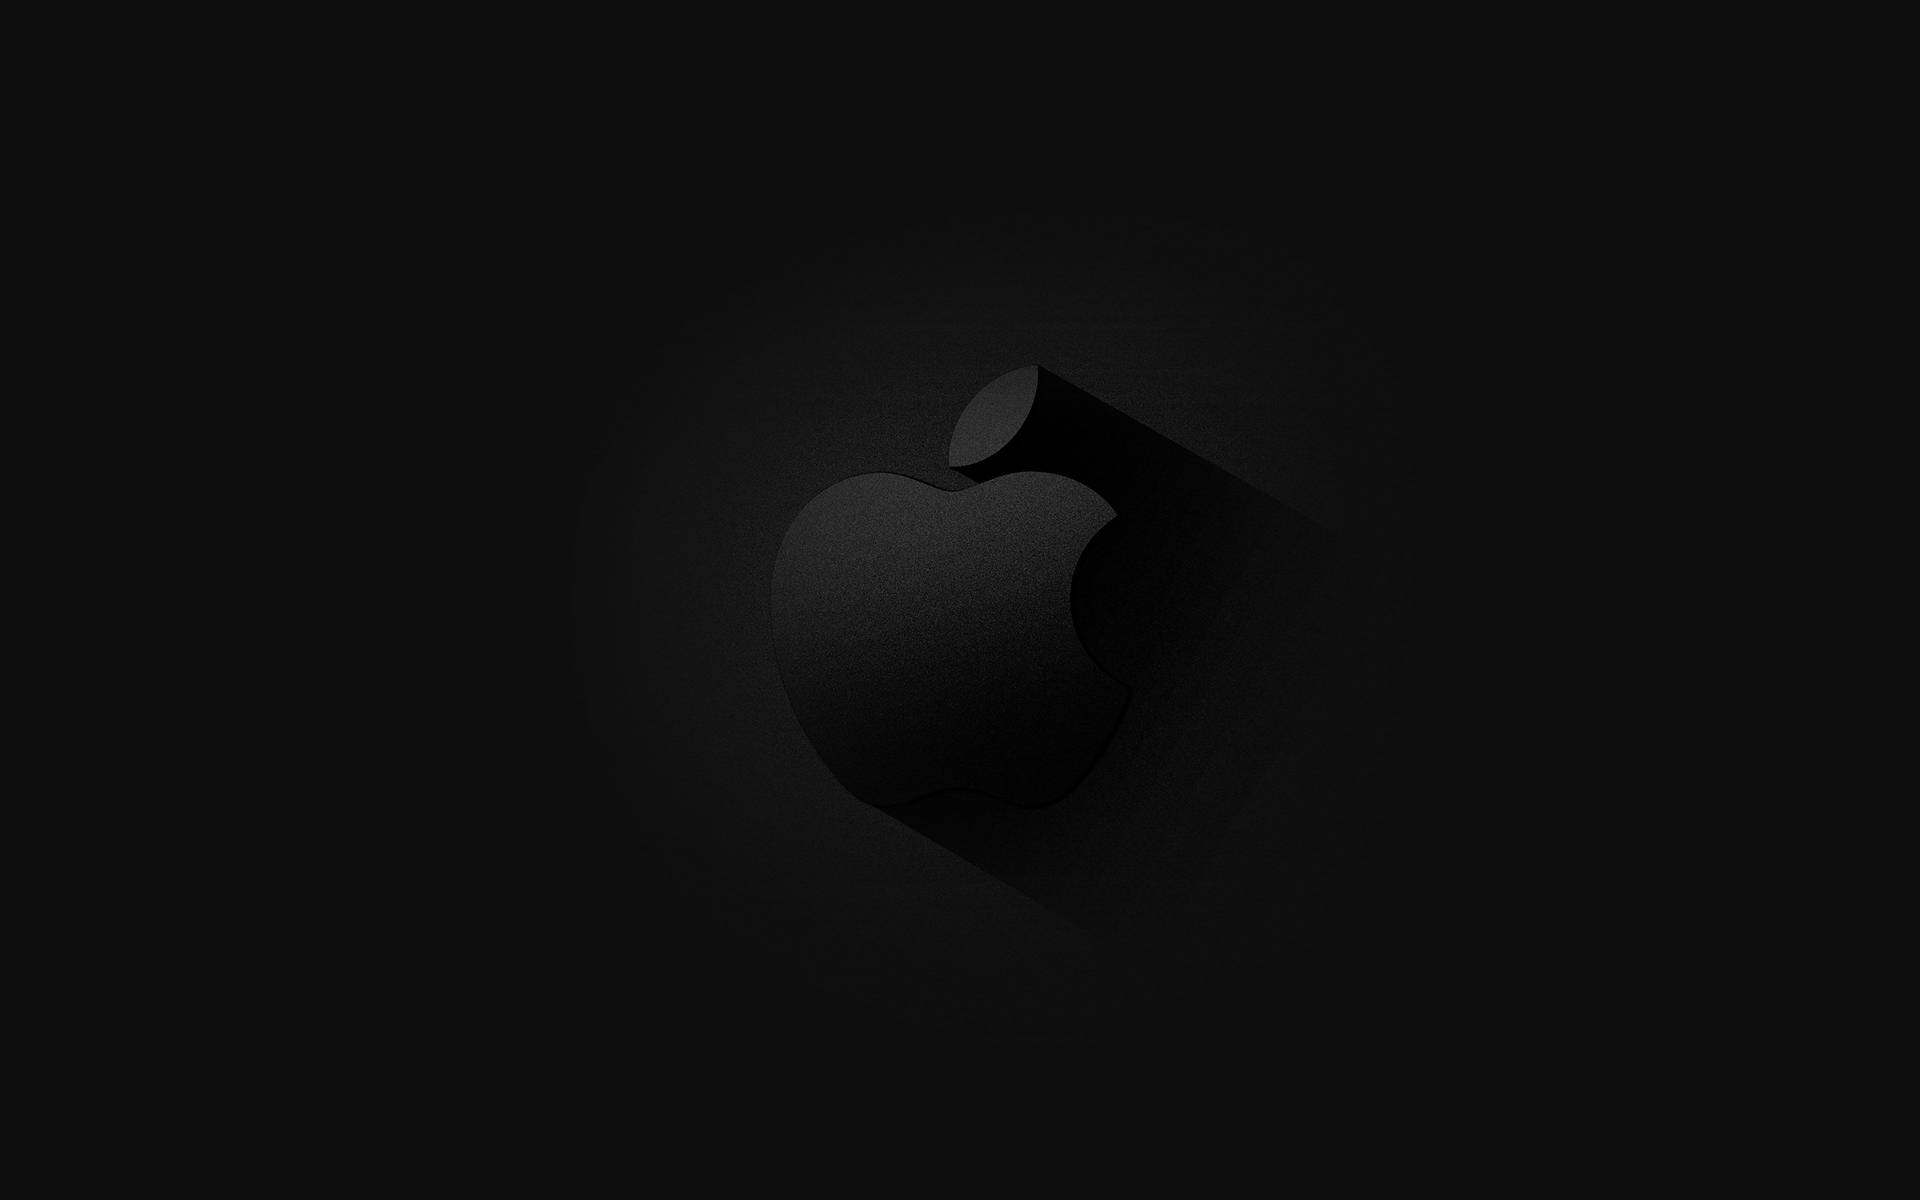 Black Mac Apple Logo Background